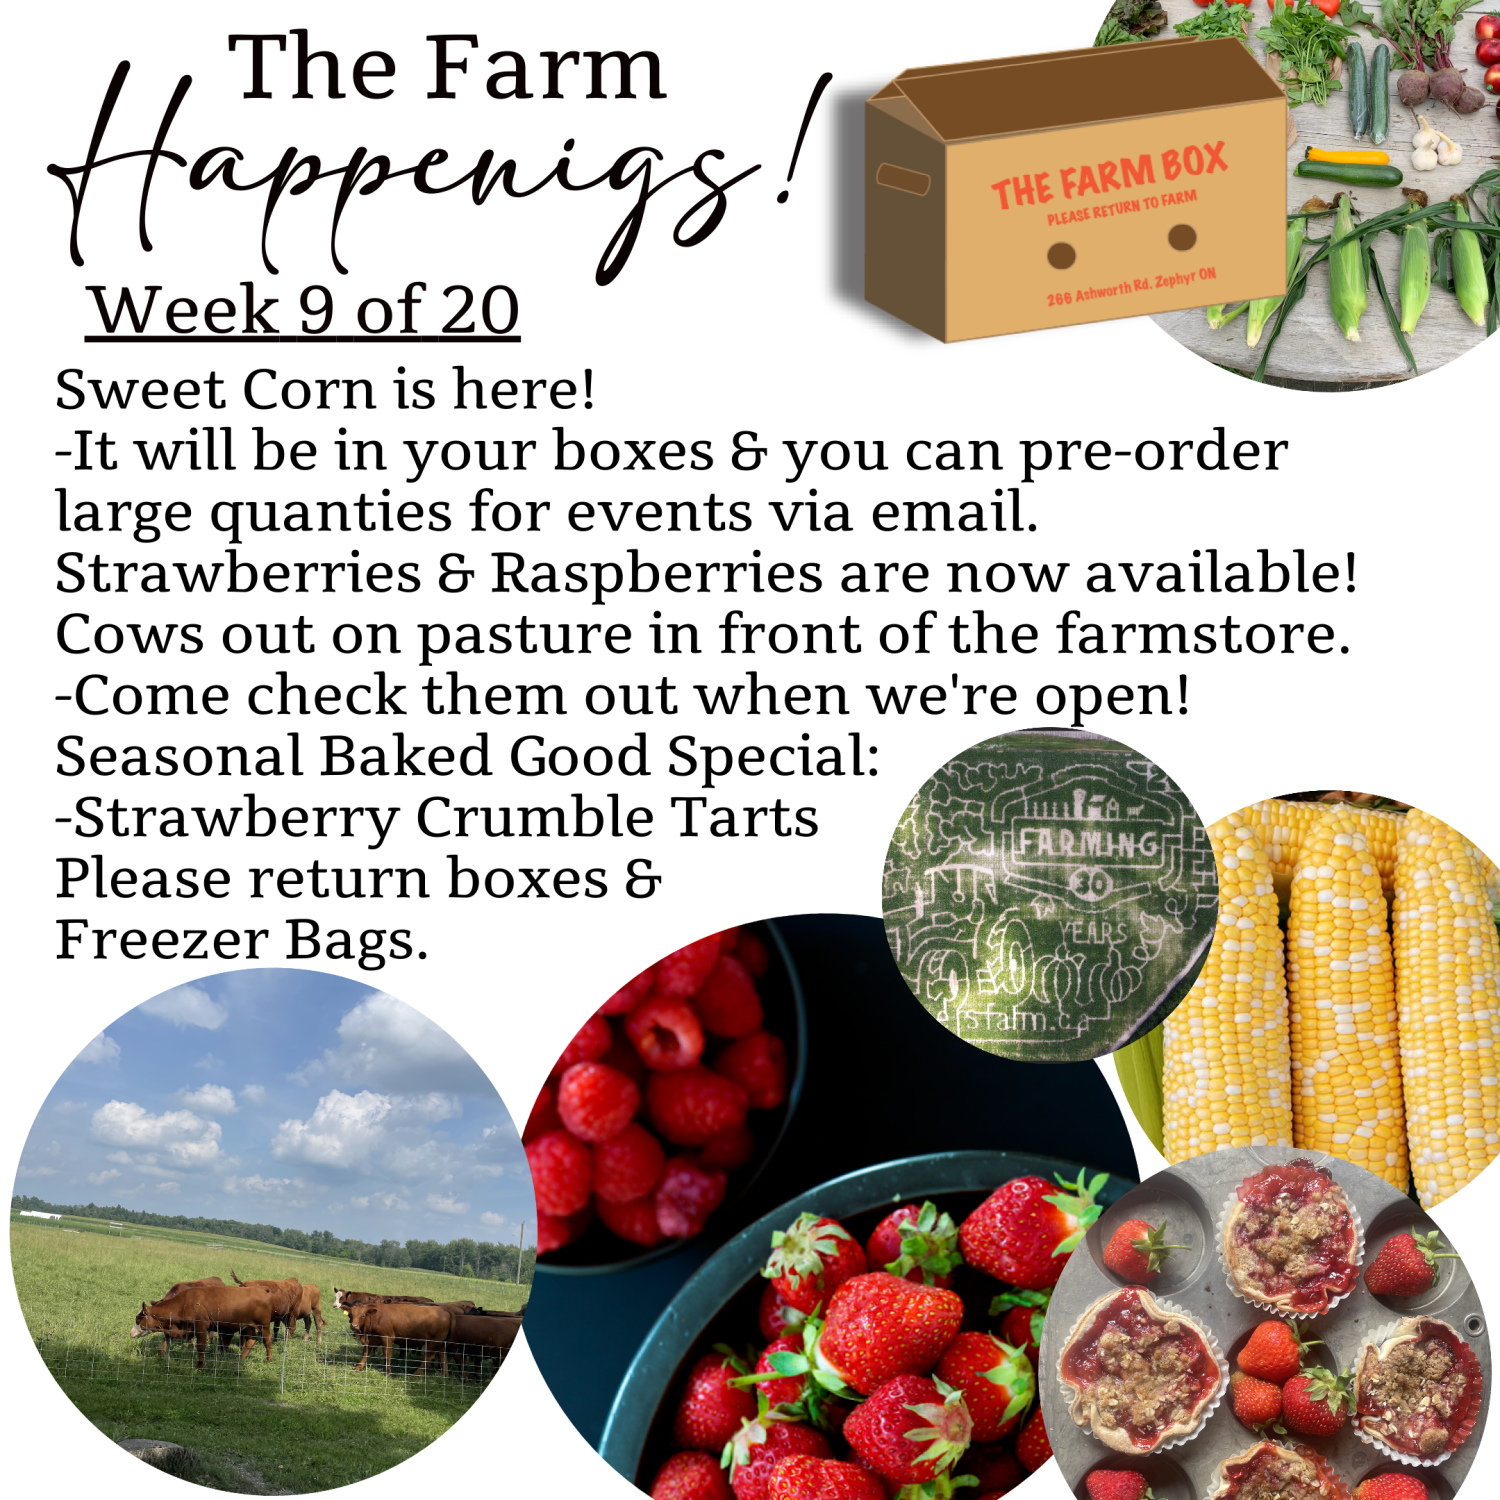 Next Happening: "The Farm Box"-Coopers CSA Farm Farm Happenings Week 9